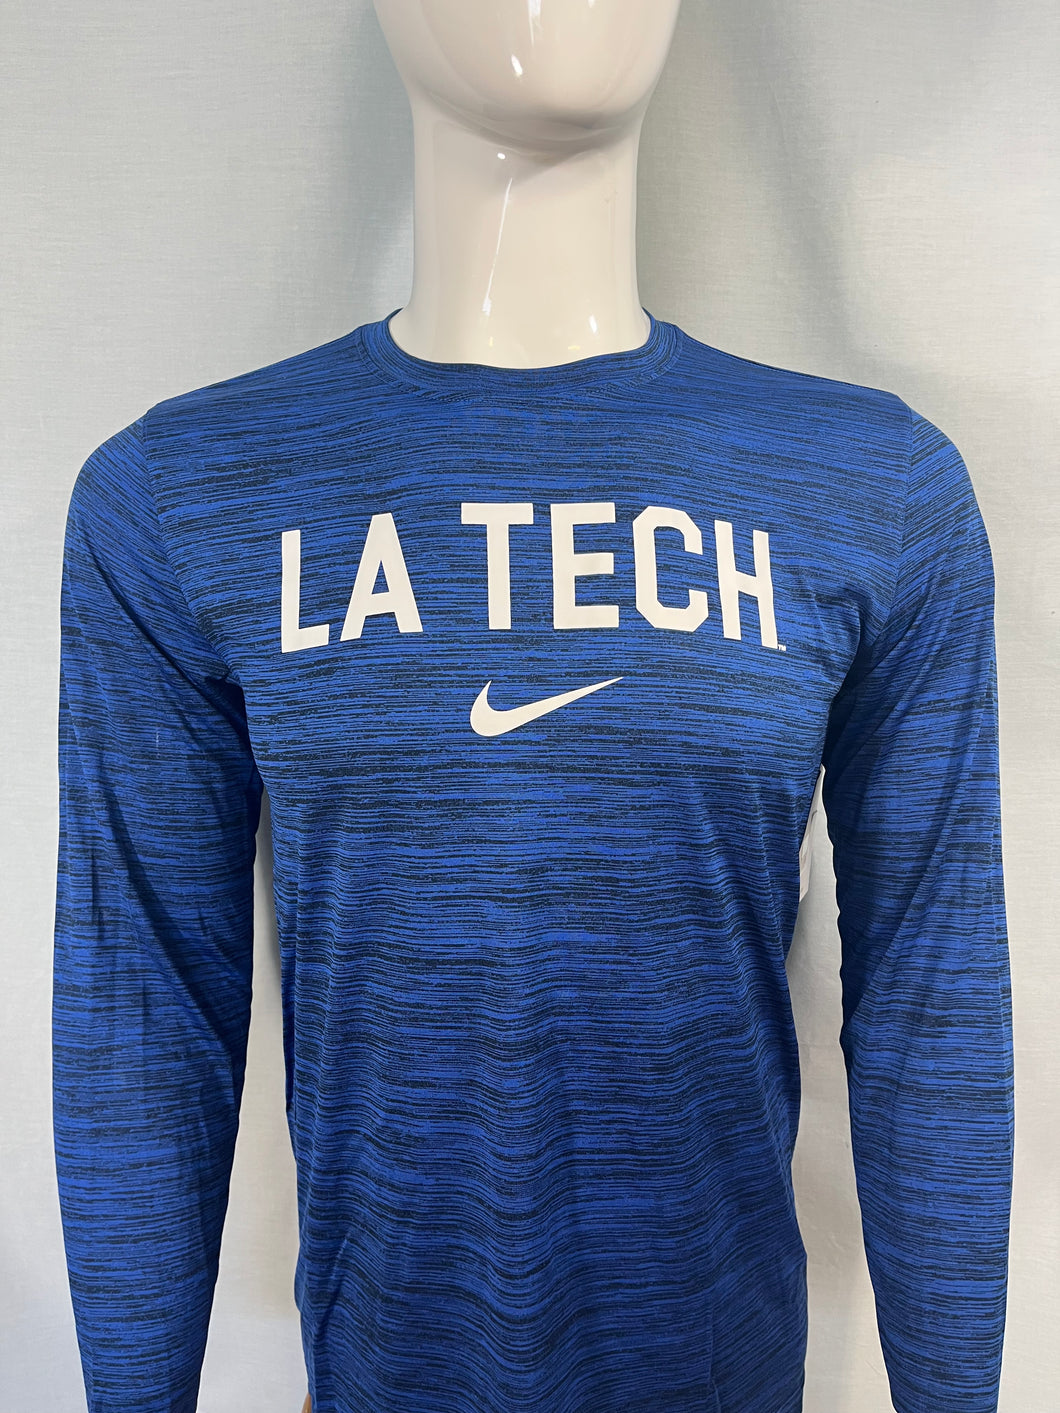 LaTech Nike Royal Long Sleeve Velocity Shirt